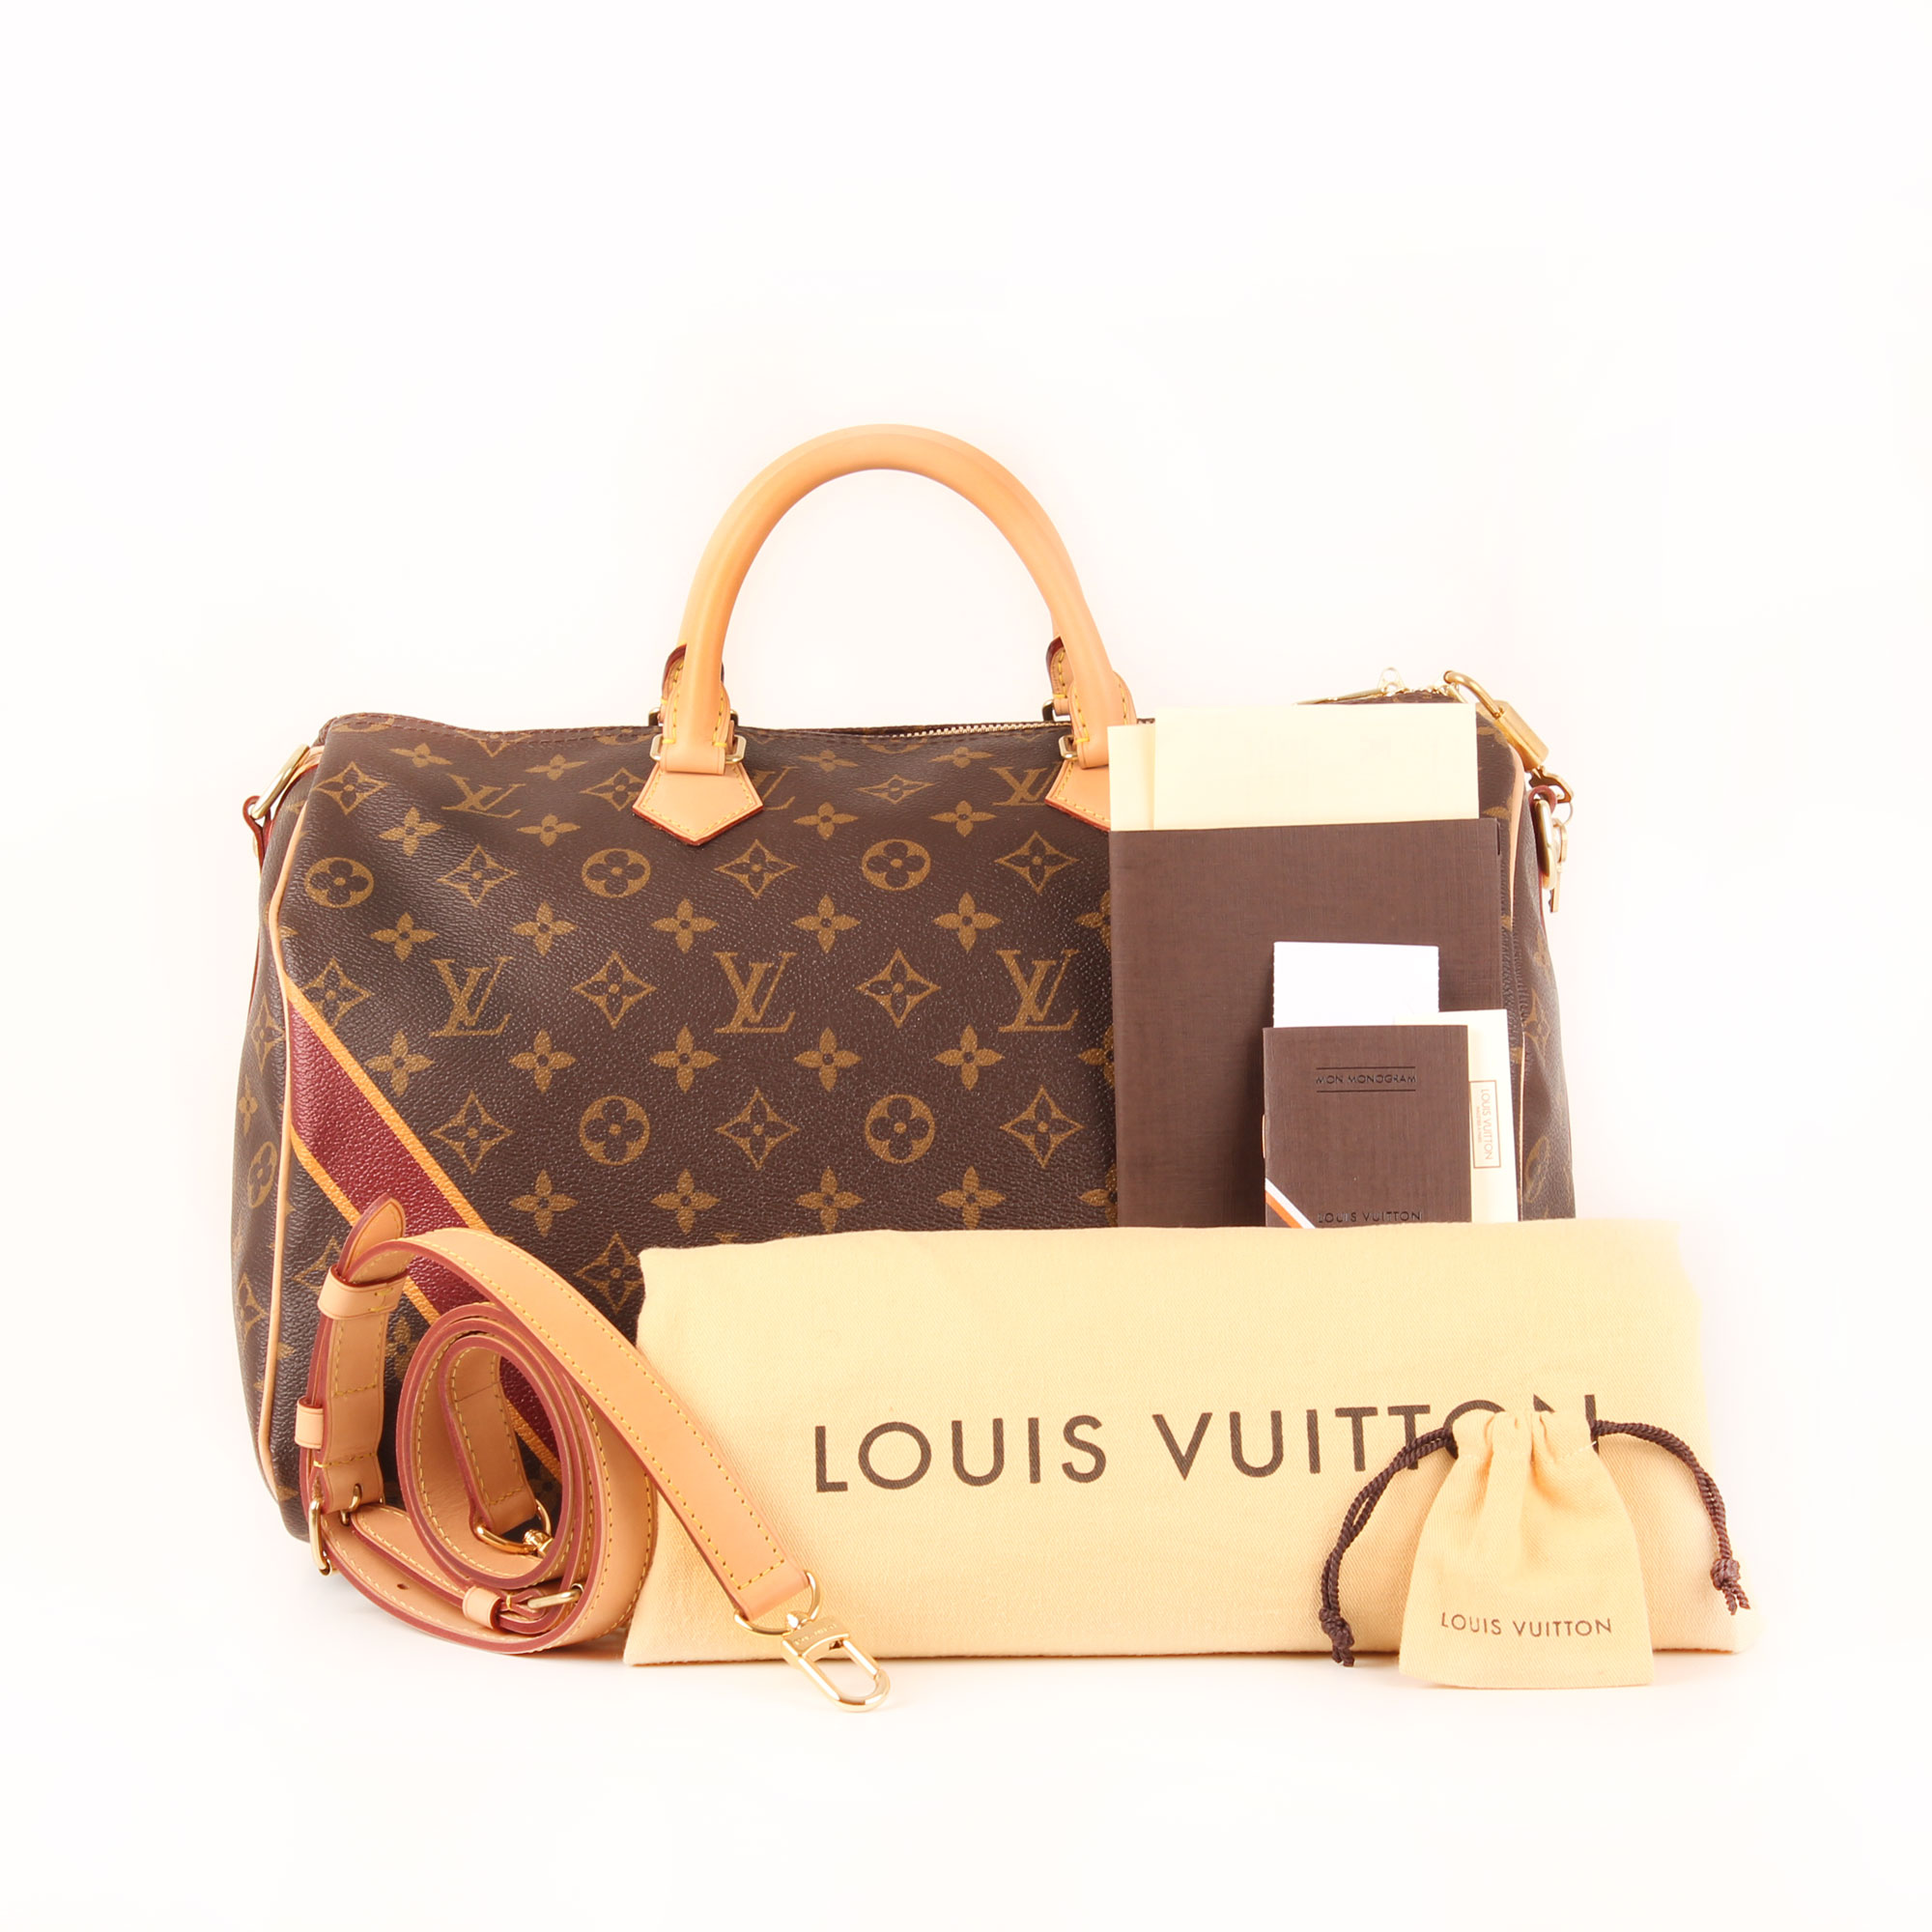 Louis Vuitton Speedy 35 Mon Monogram | CBL Bags